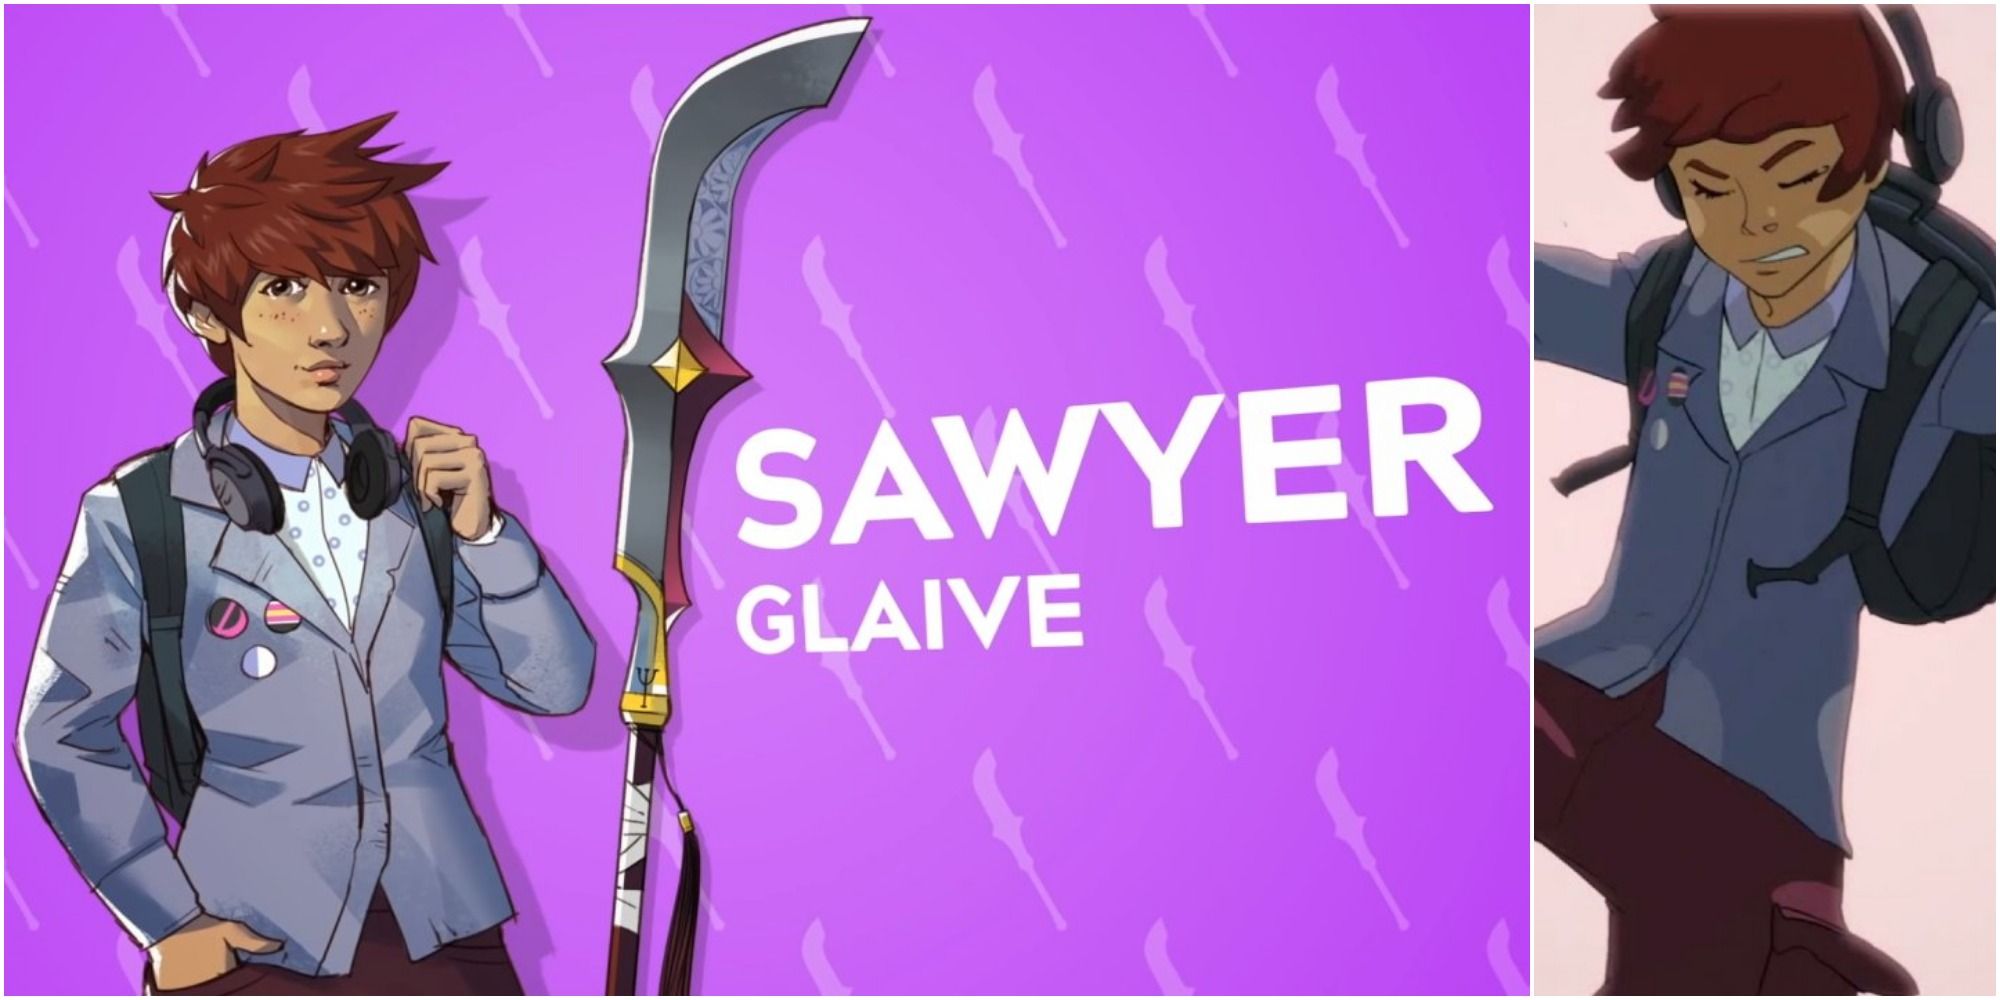 Sawyer and their glaive form in Boyfriend Dungeon